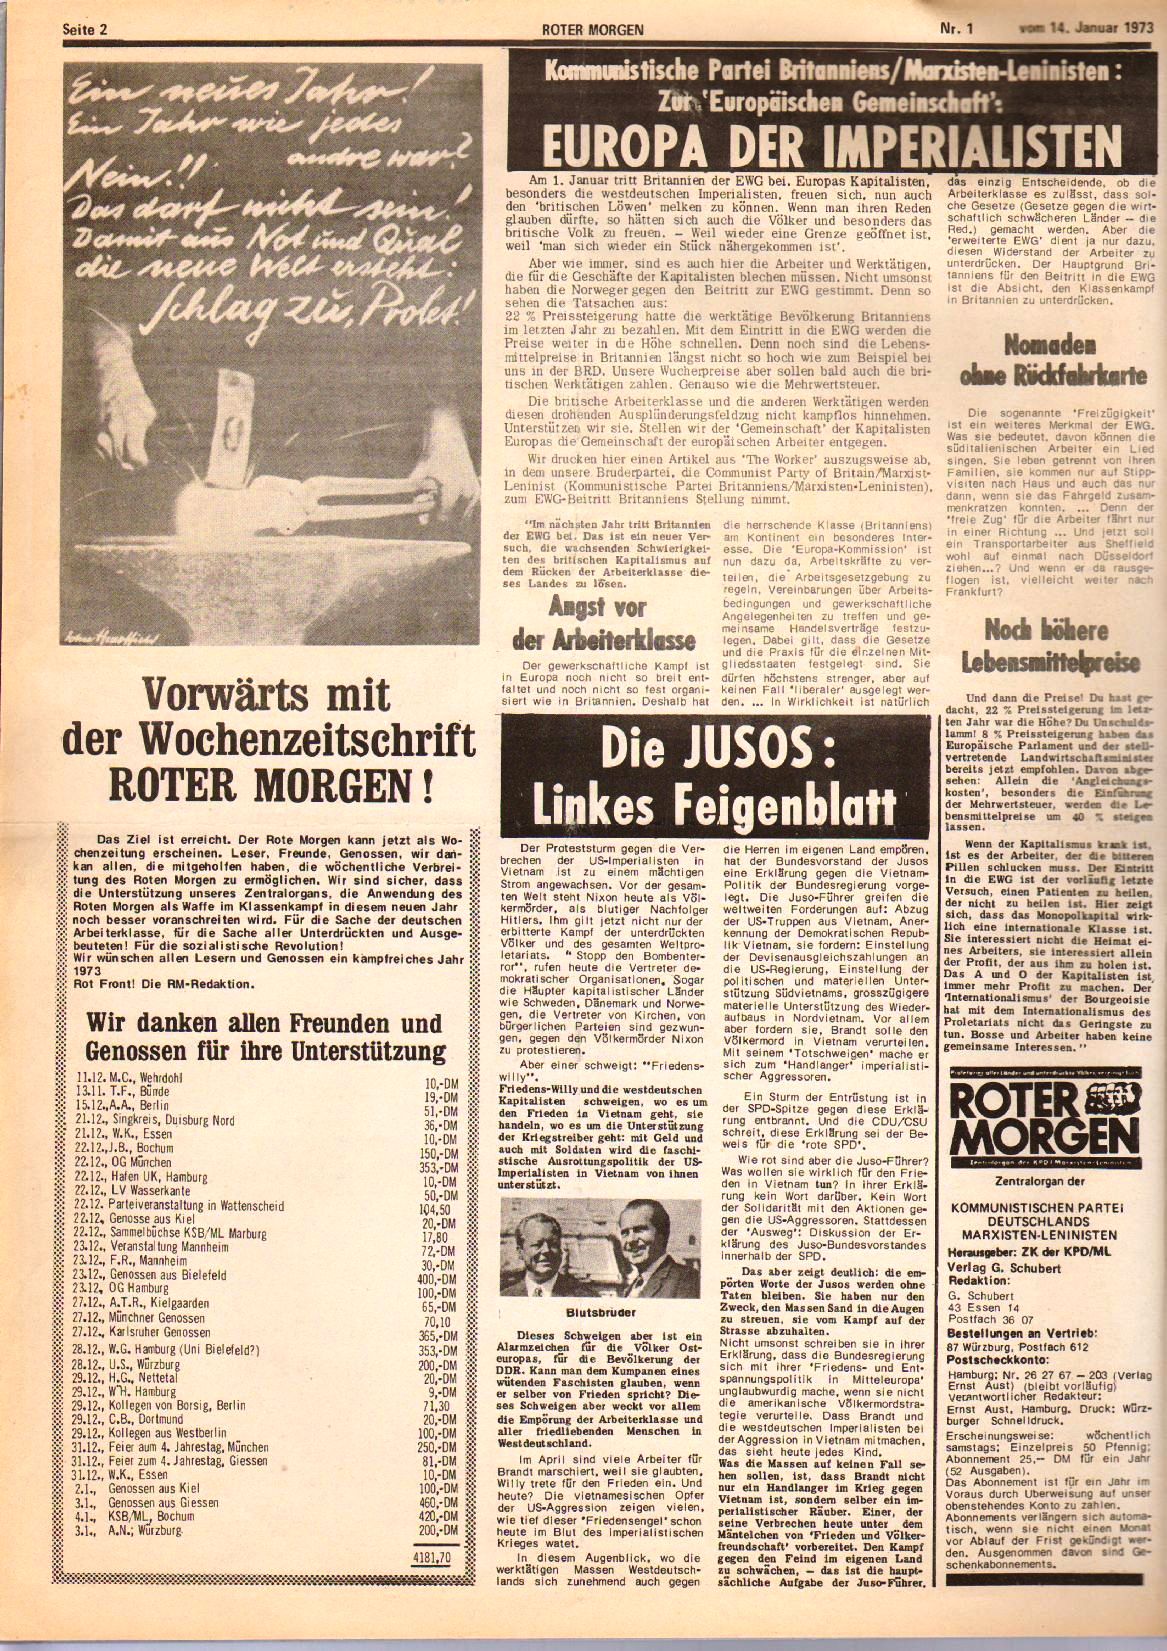 Roter Morgen, 7. Jg., 14. Januar 1973, Nr. 1, Seite 2